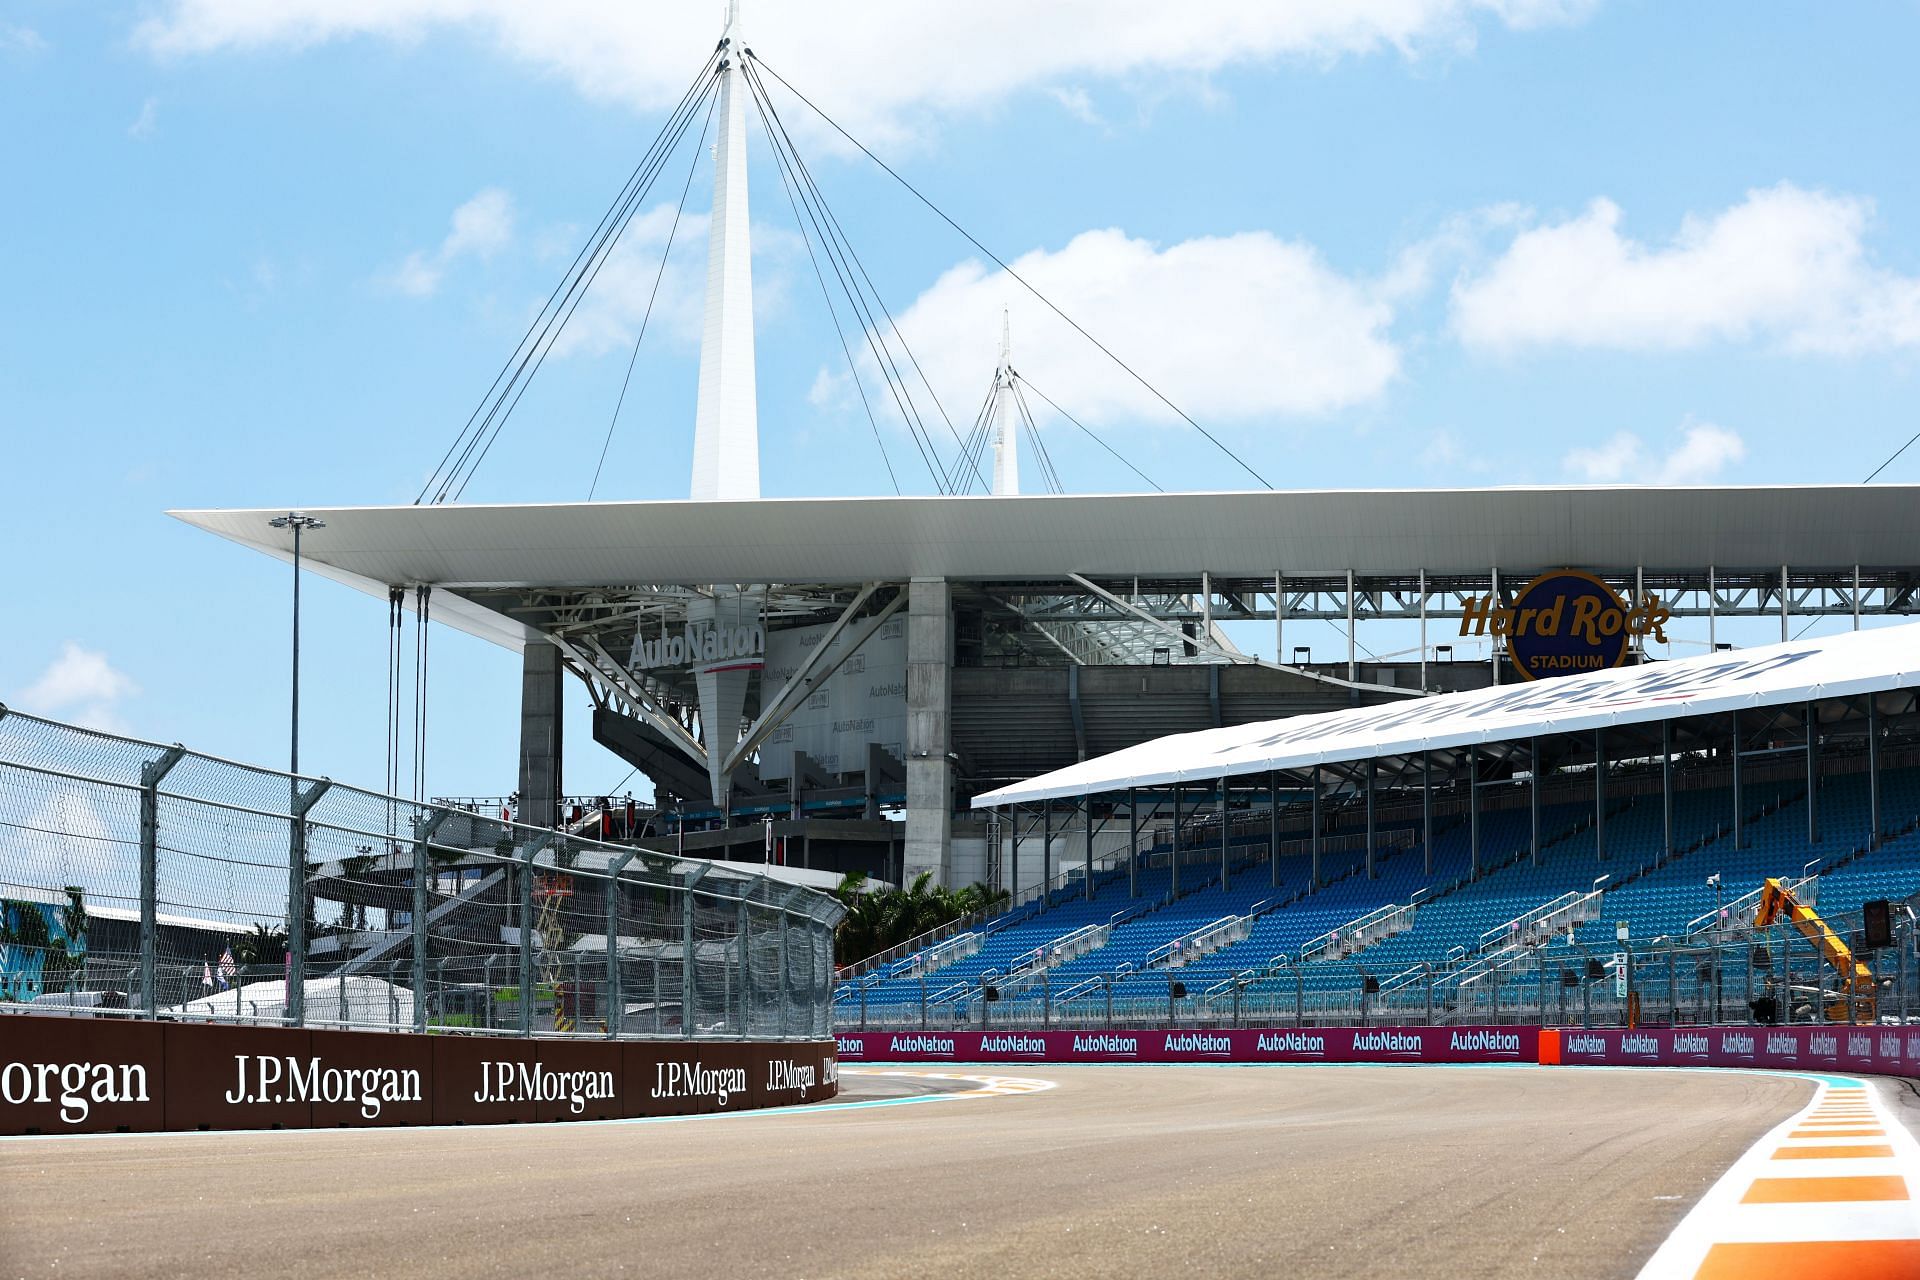 The Miami International Autodrome is semi-permananet track built around the Miami Hard Rock stadium